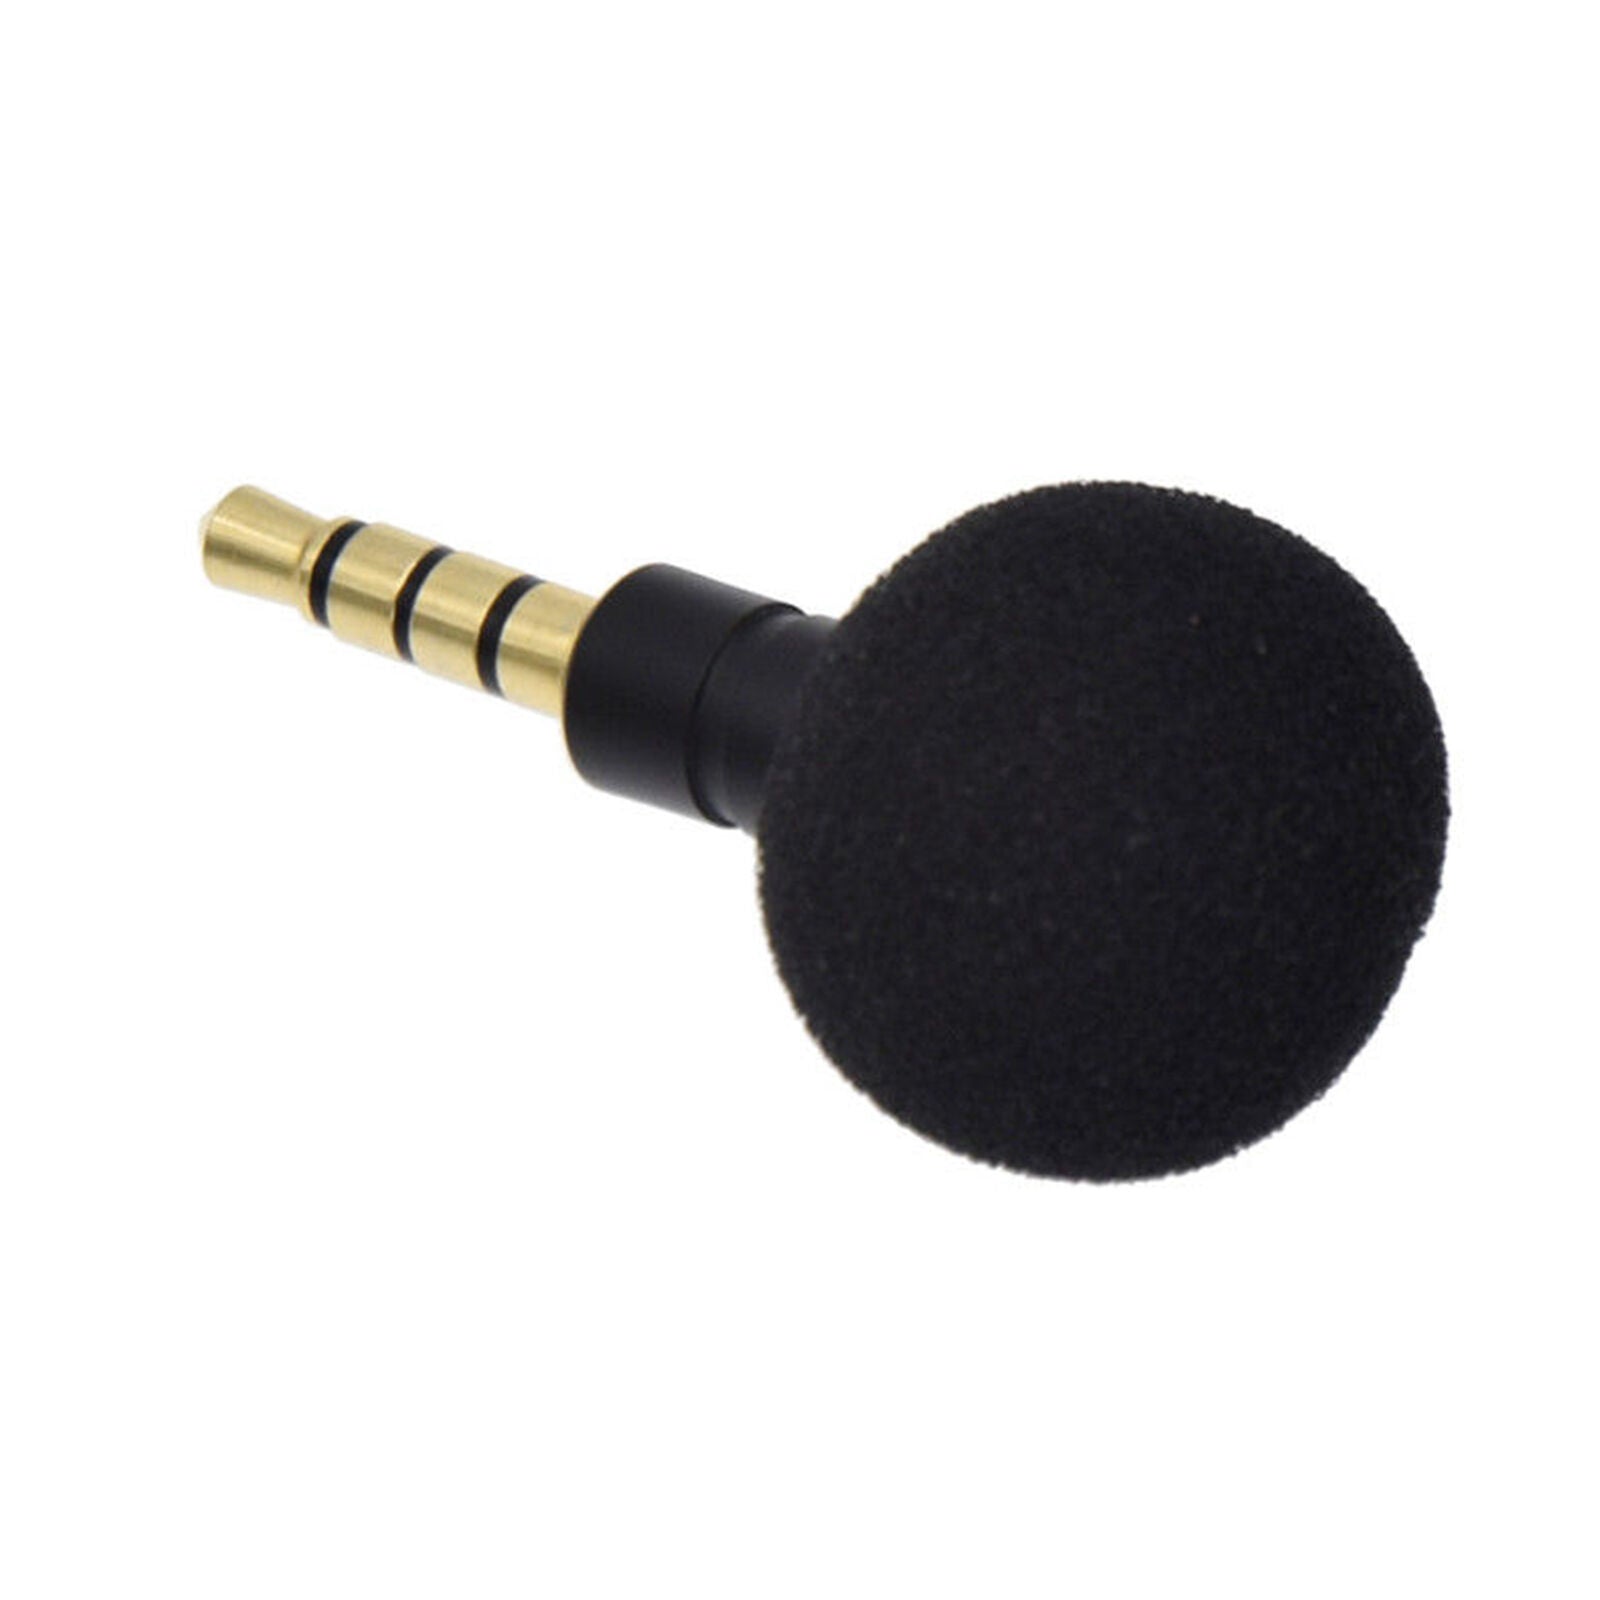 3.5mm Mini Black Wireless Microphone for Smartphone Mobile Phone Recording